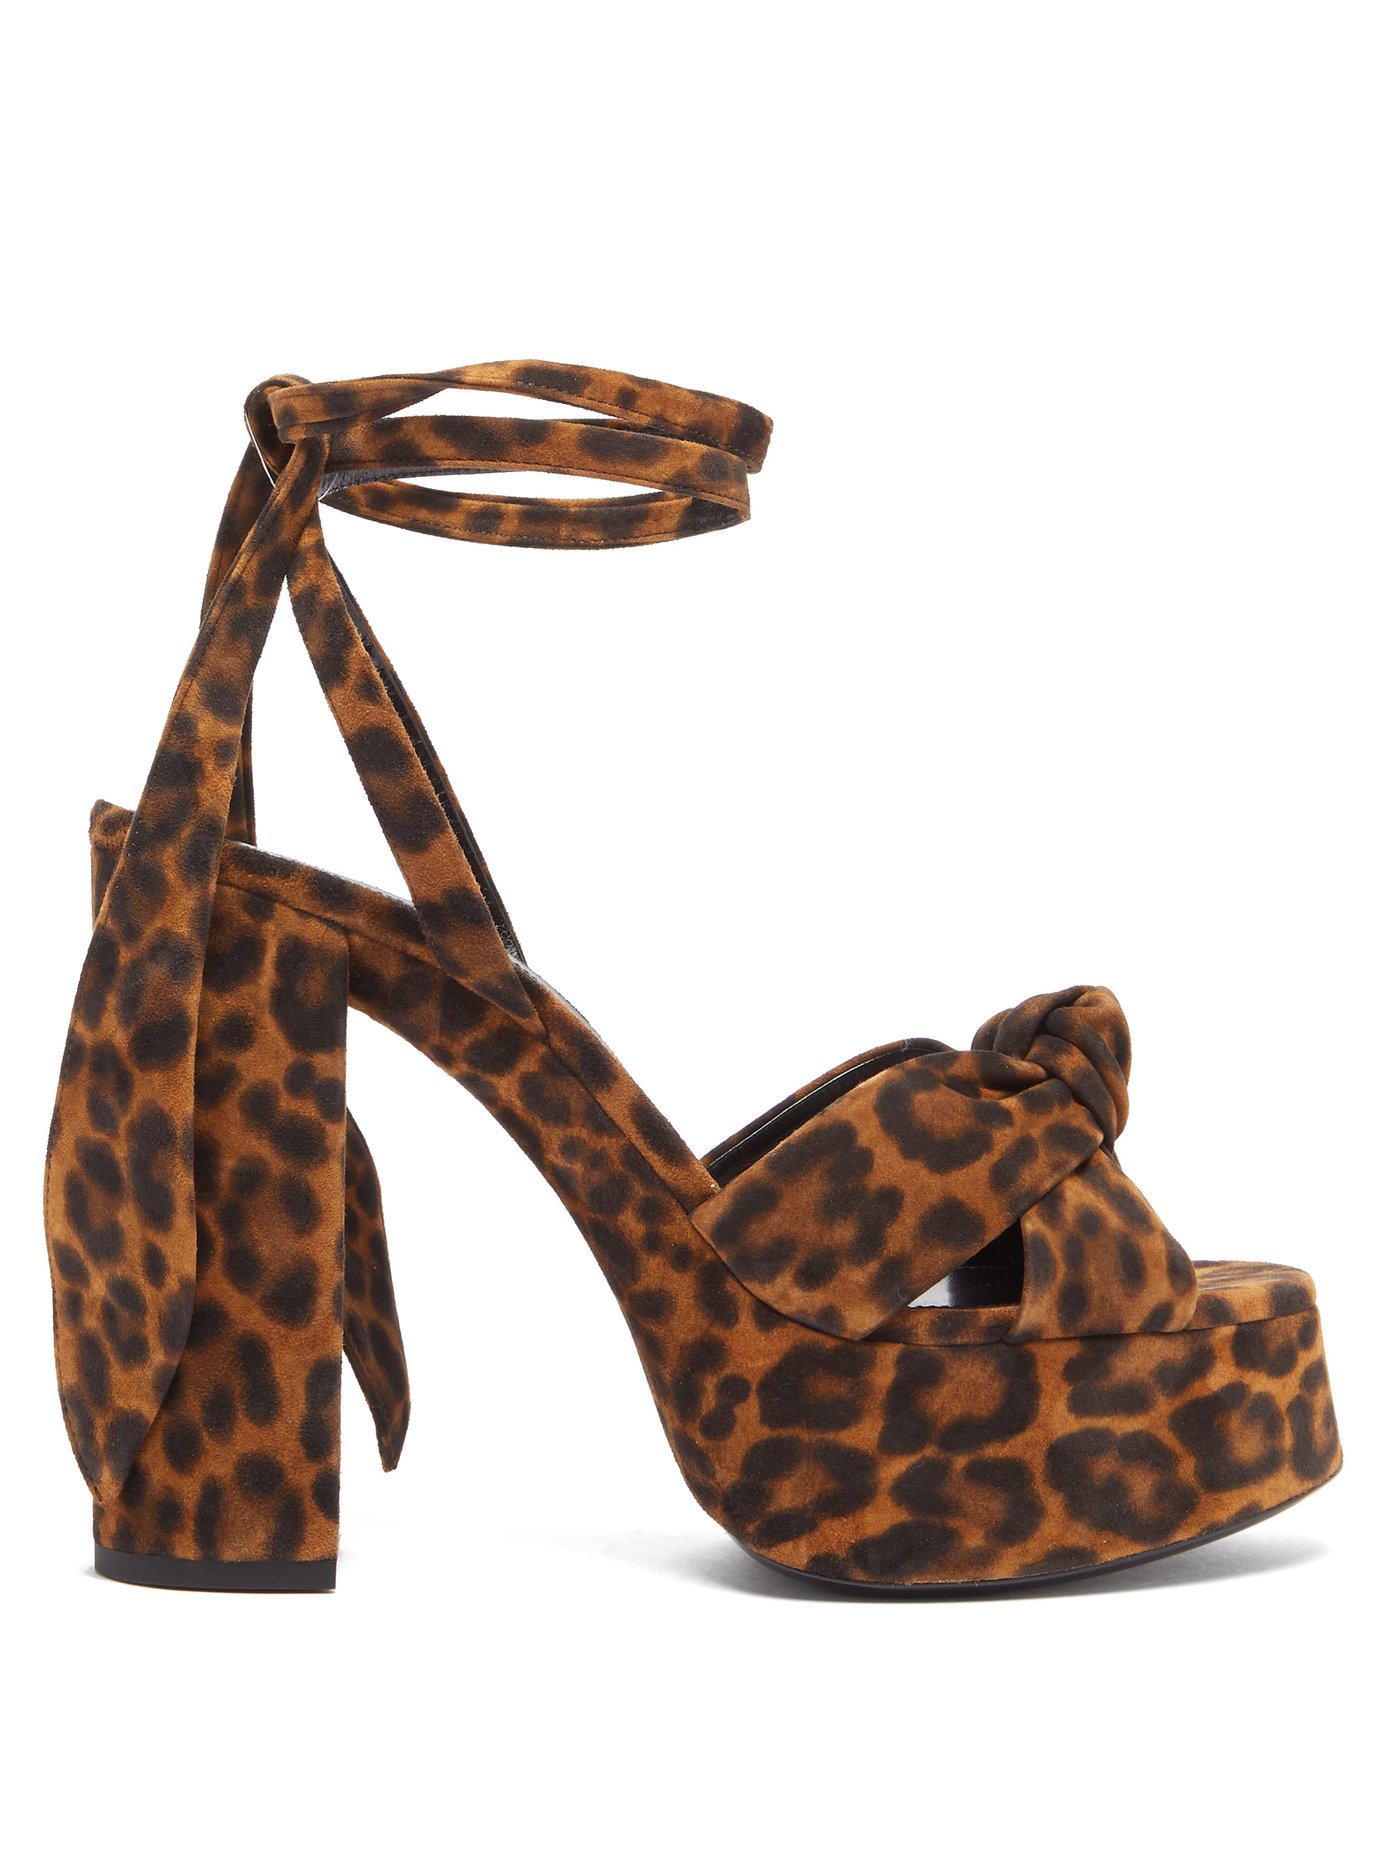 leopard print wedge sandals uk